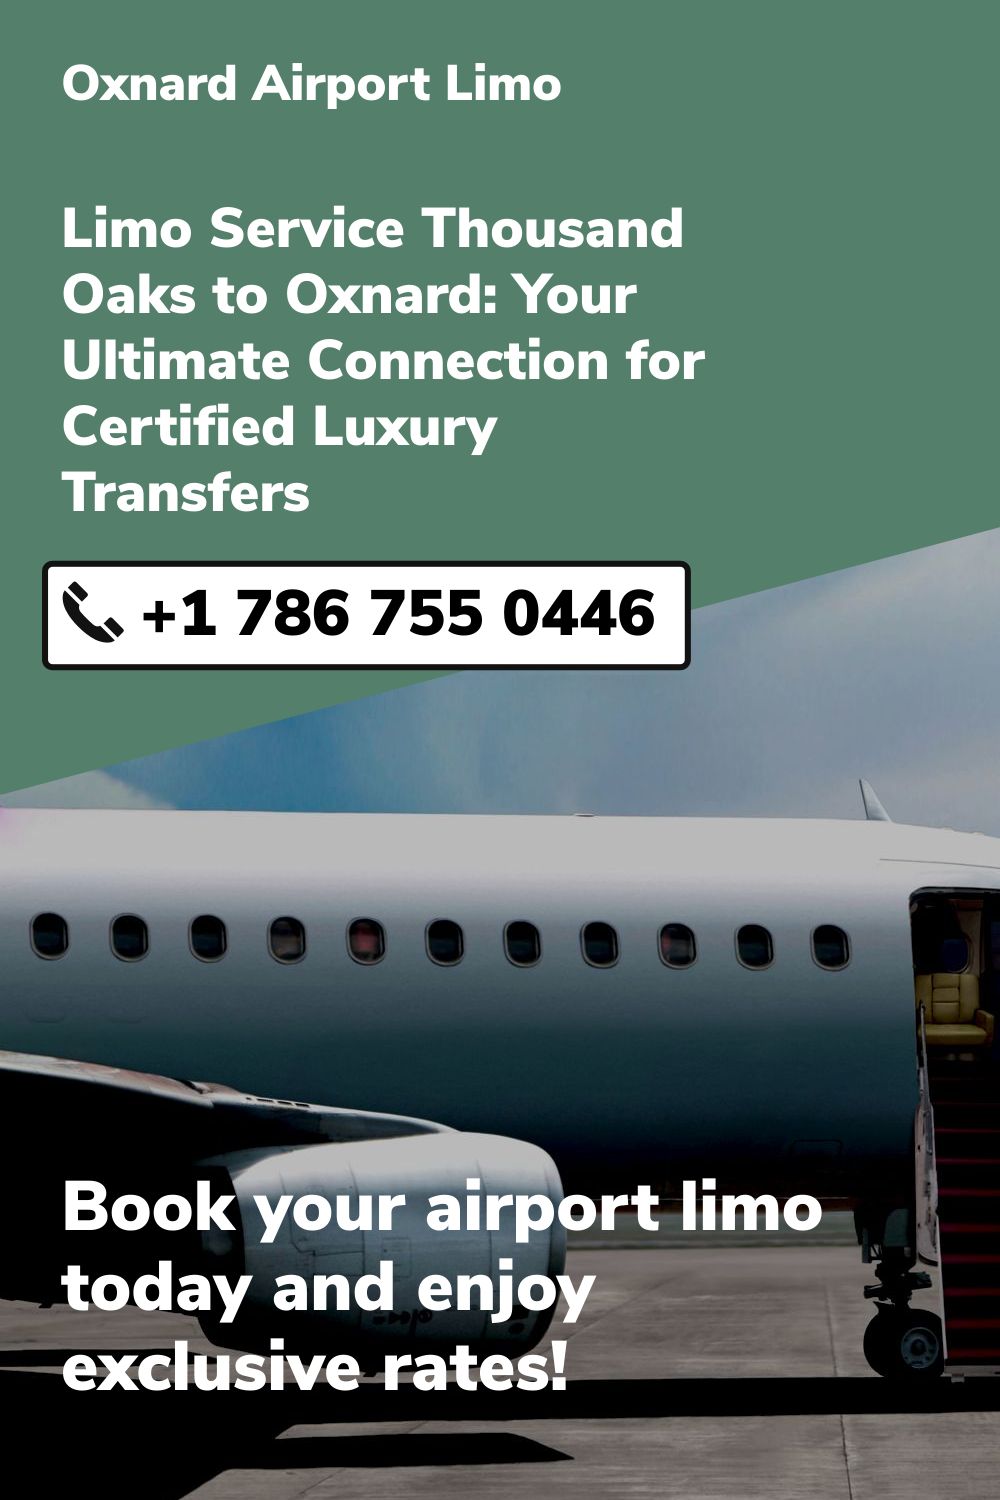 Oxnard Airport Limo